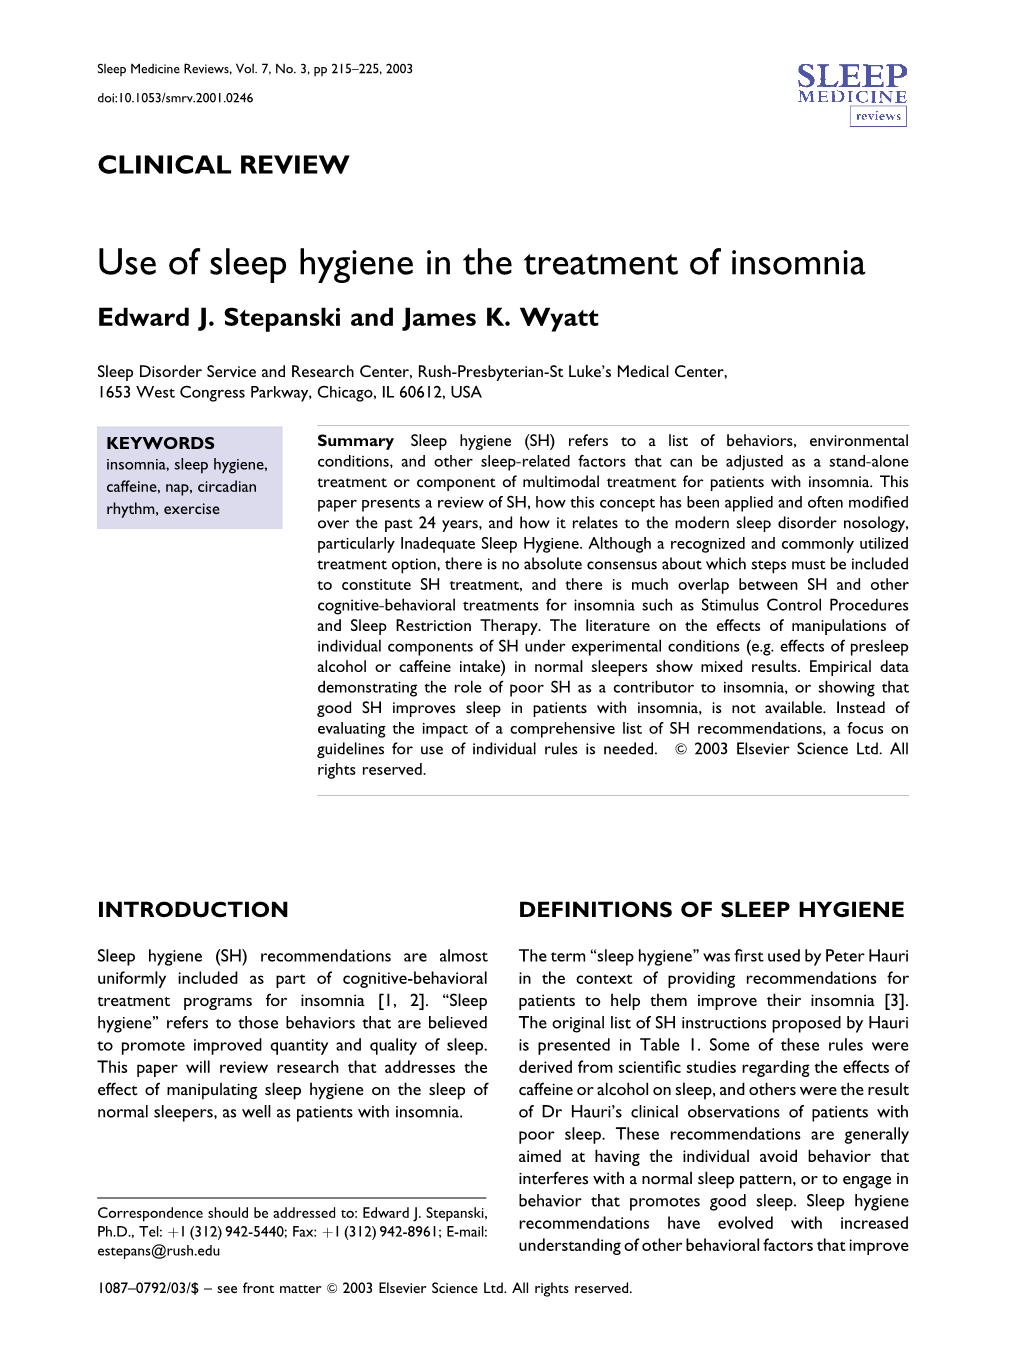 Use of Sleep Hygiene in the Treatment of Insomnia Edward J